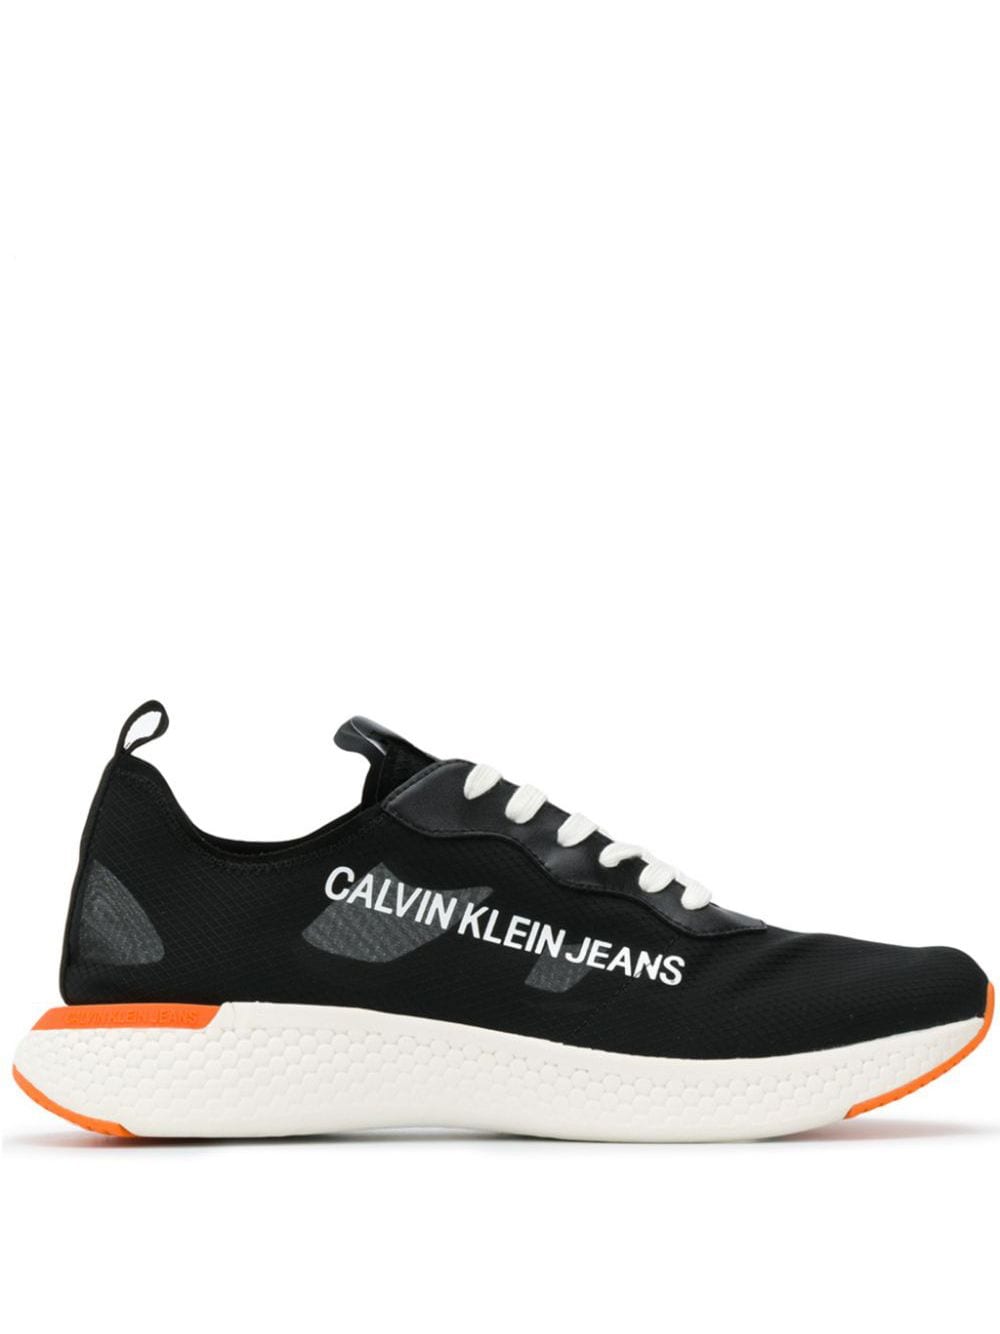 calvin klein jeans sneakers